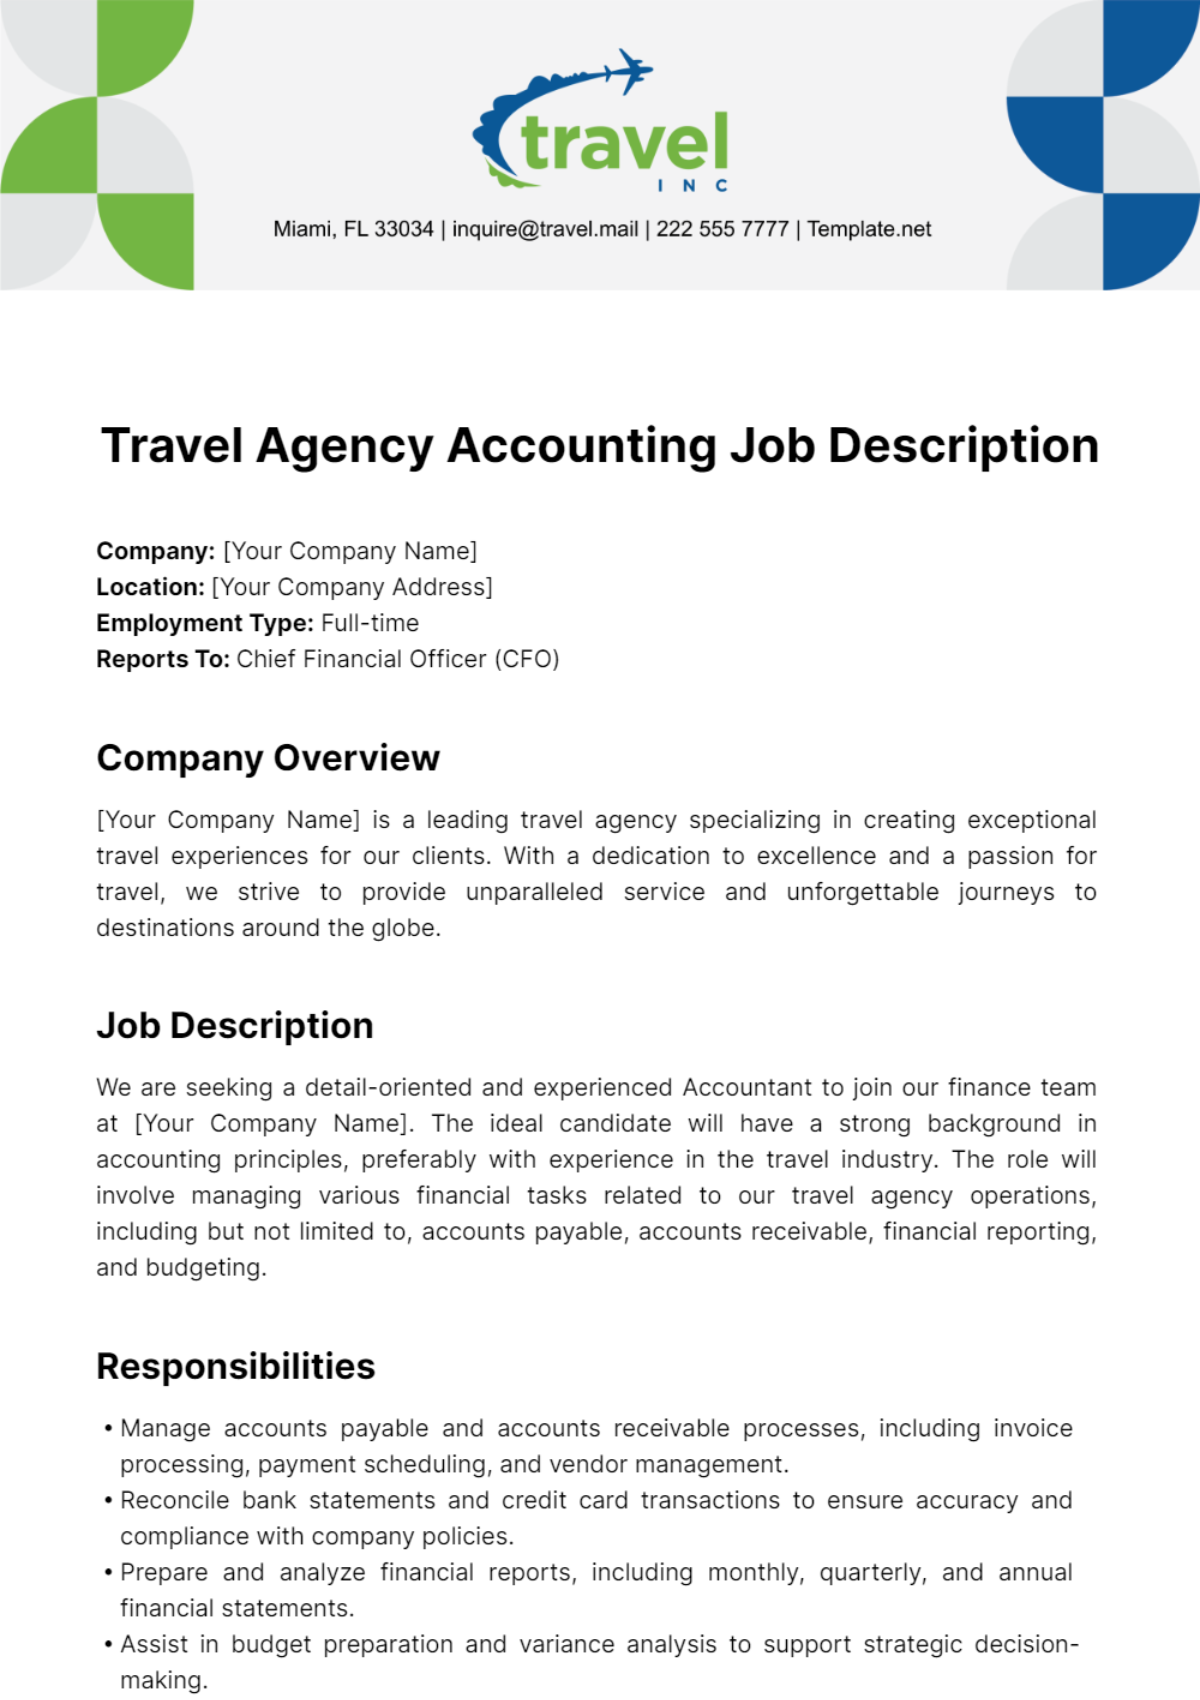 Travel Agency Accounting Job Description Template